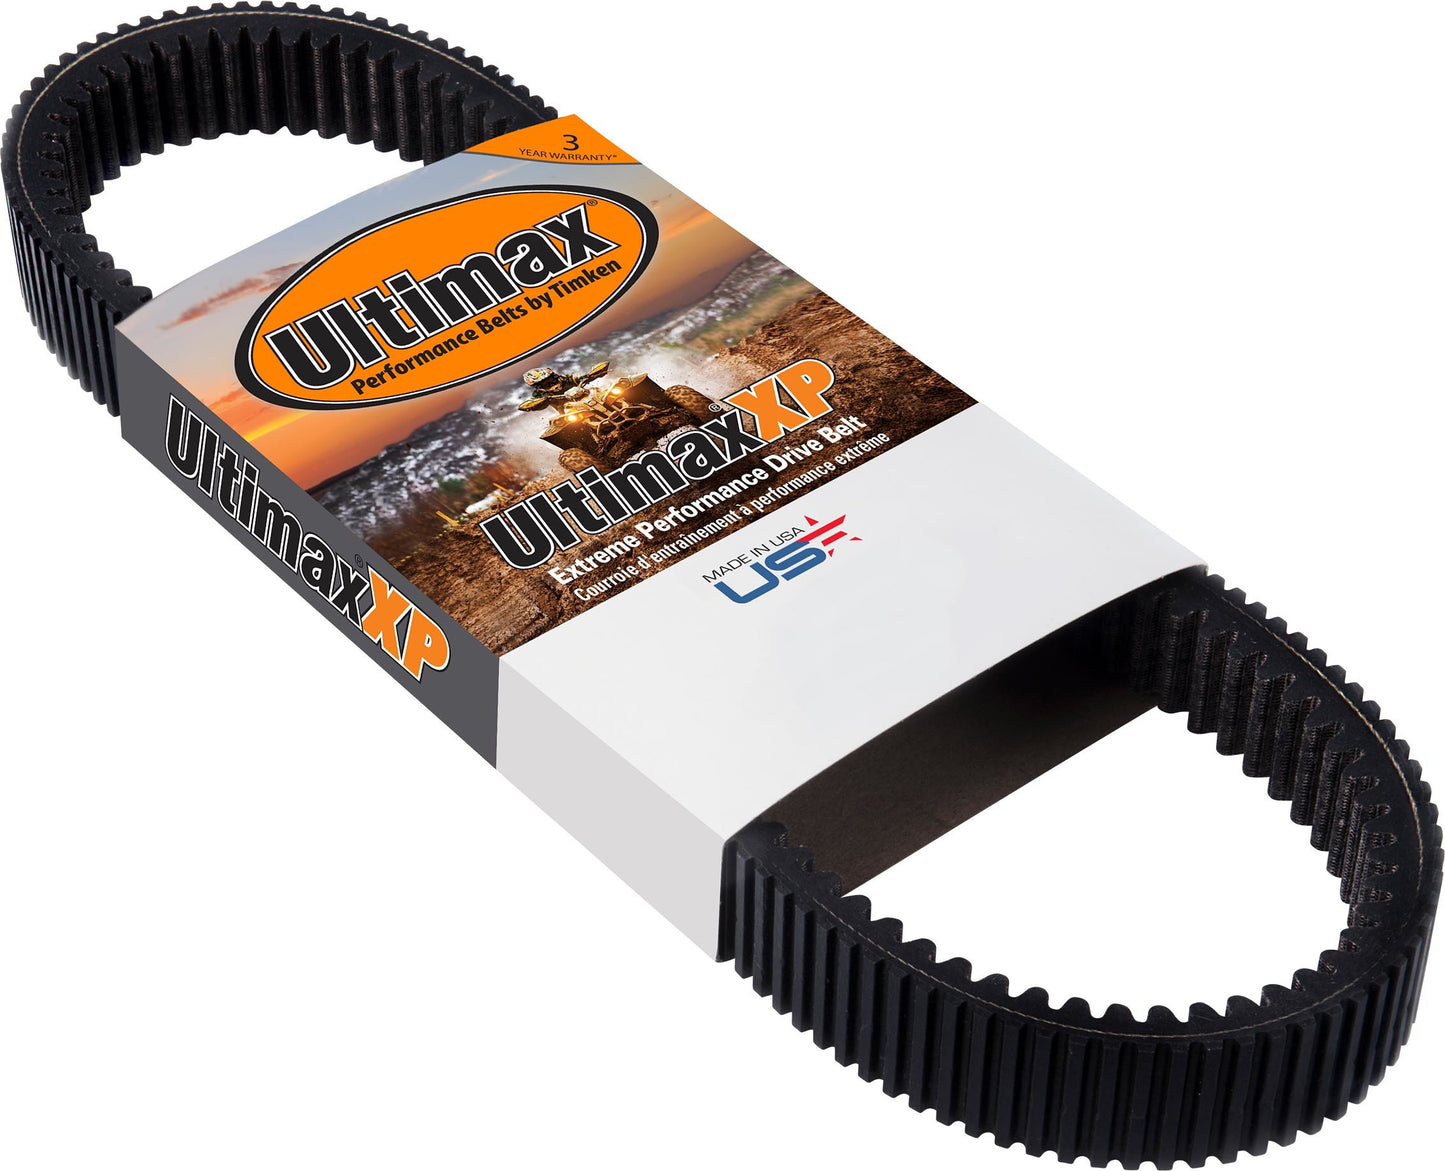 Hypermax Drive Belt UXP488